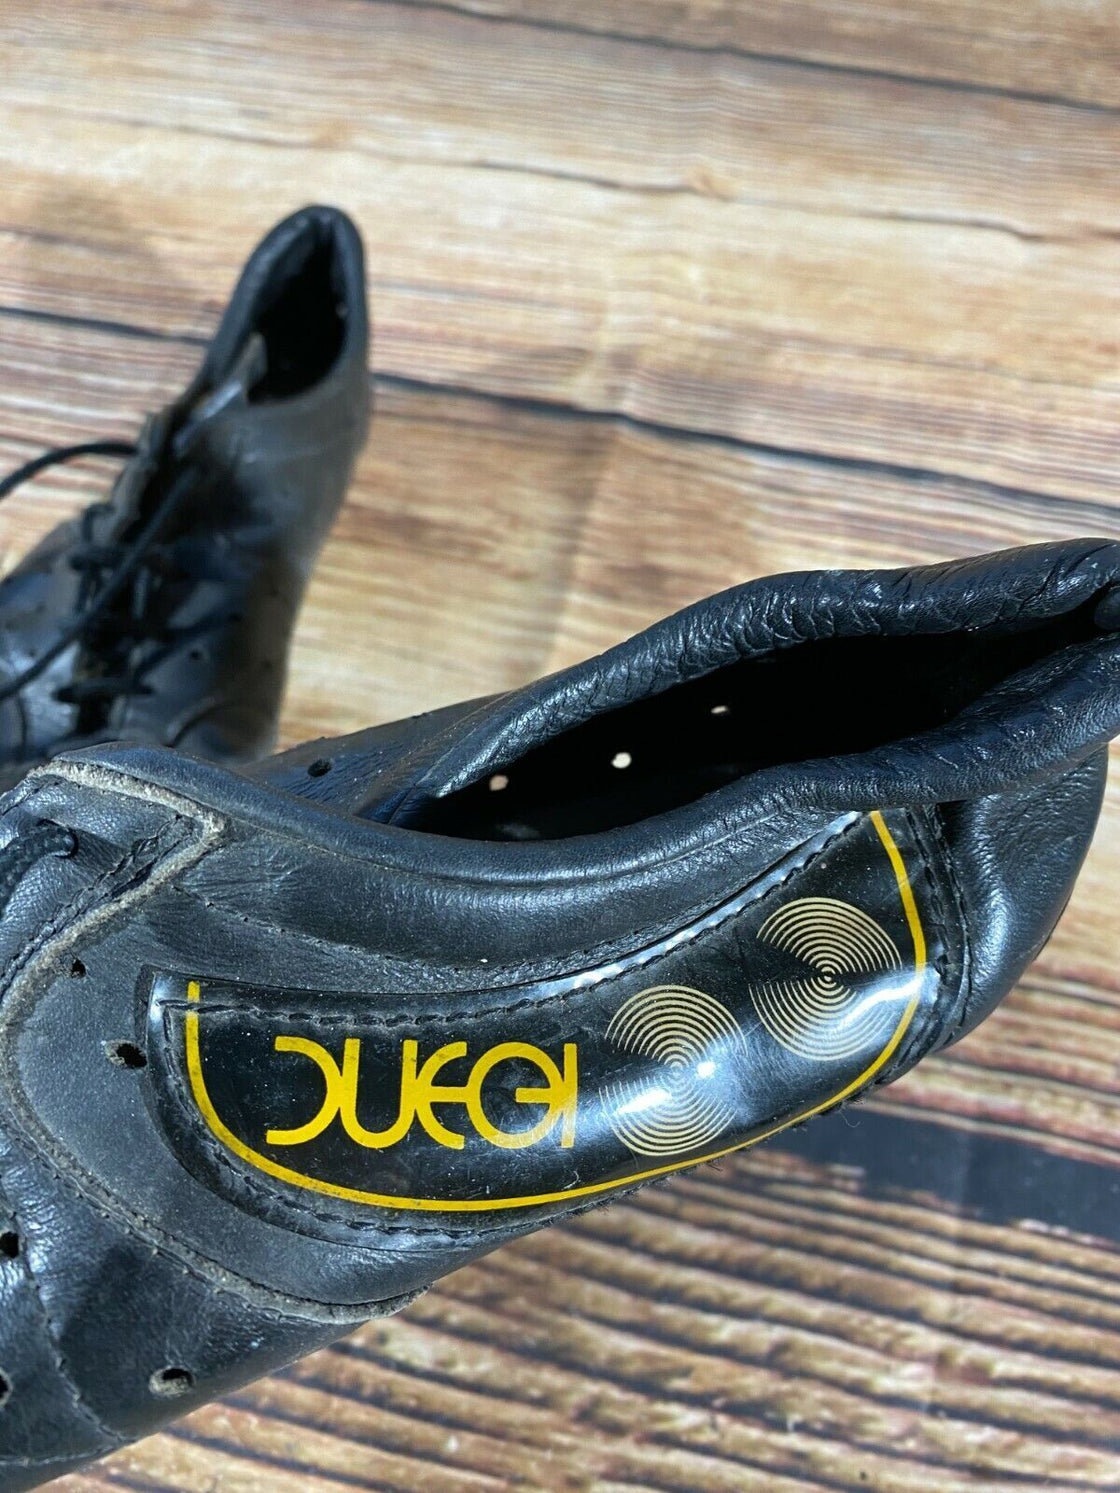 DUEGI Leather Vintage Road Cycling Shoes Clipless Biking Retro Boots EU38 US6